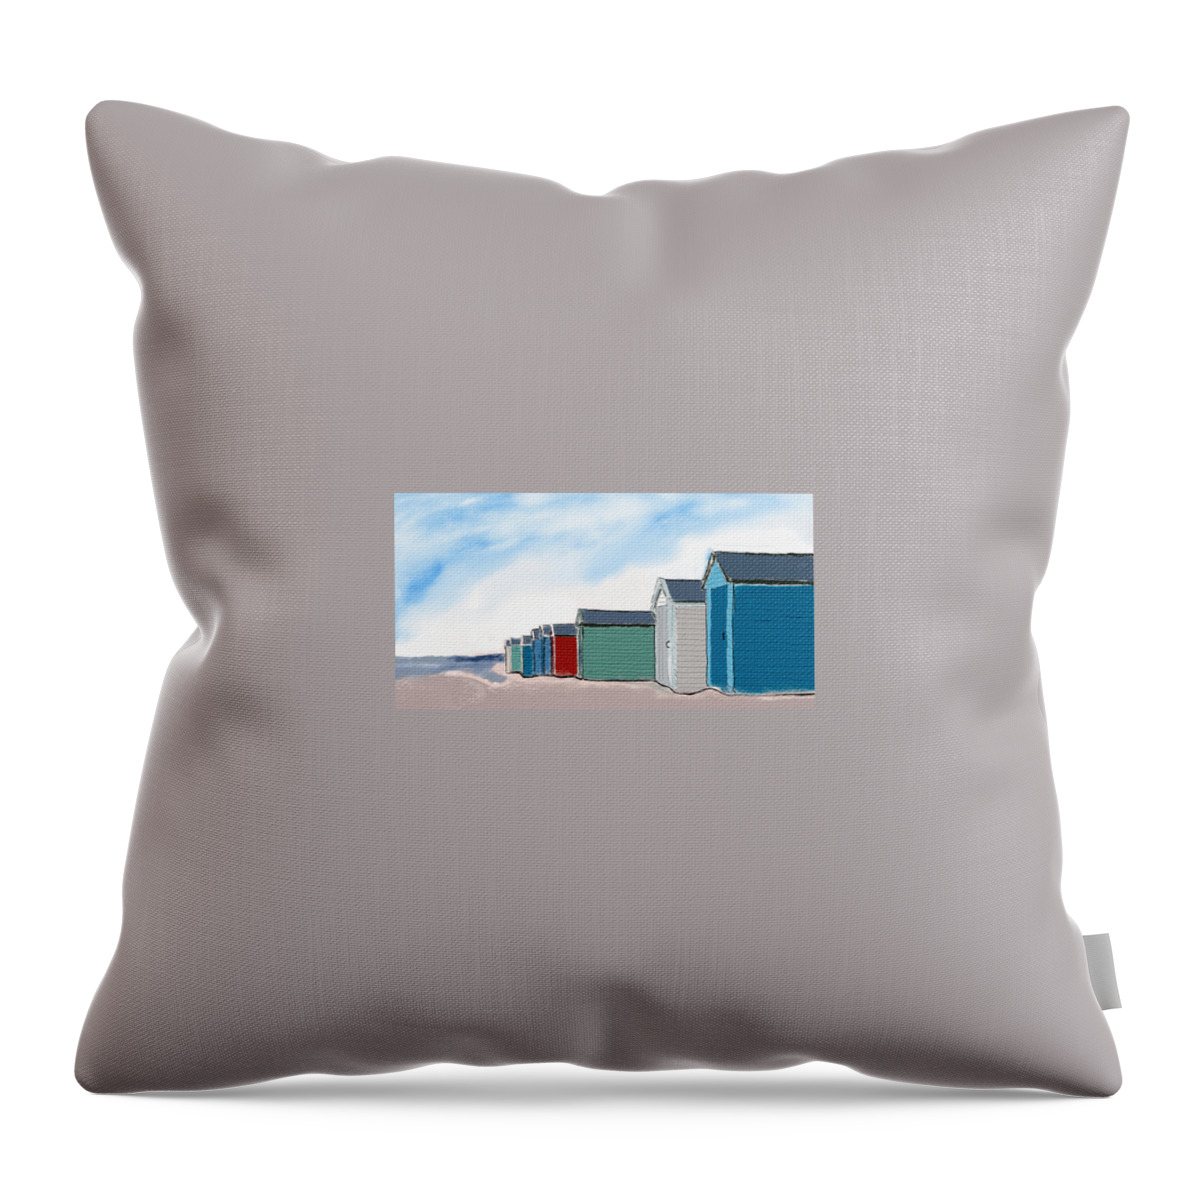 Beach Throw Pillow featuring the digital art Beach Huts by John Mckenzie